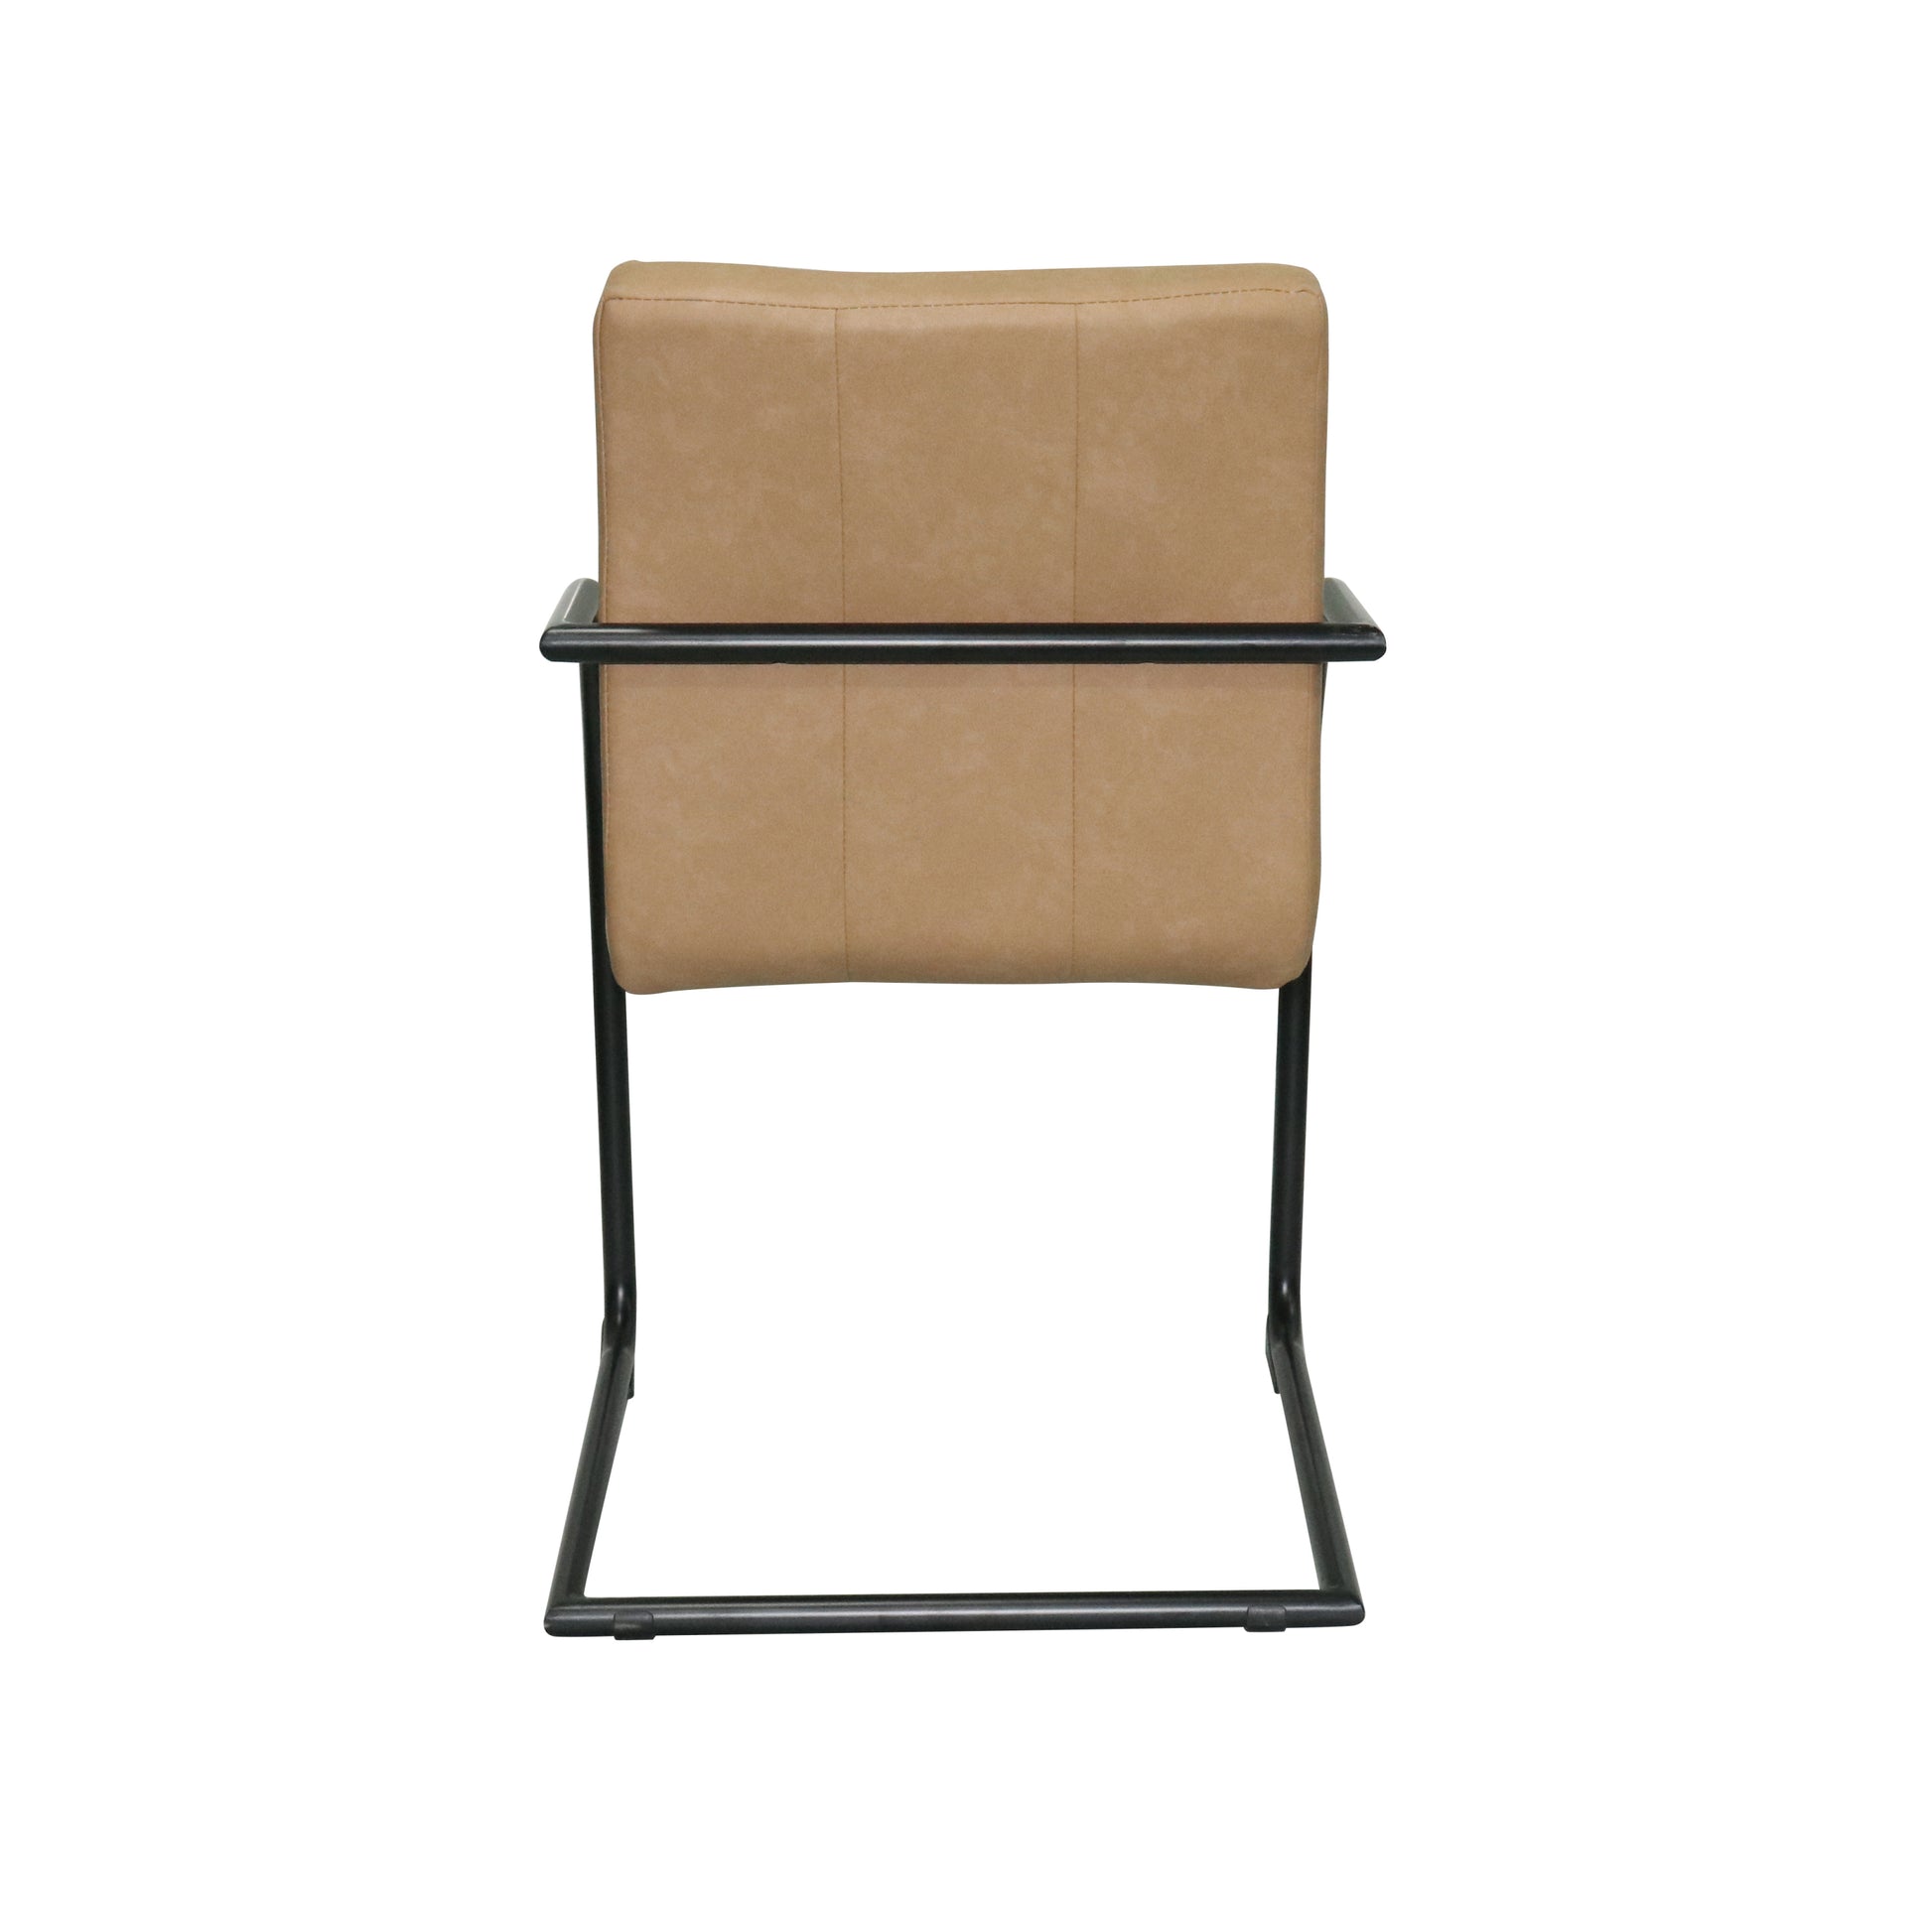 Modrest Ivey Modern Tan Dining Chair Set of 2